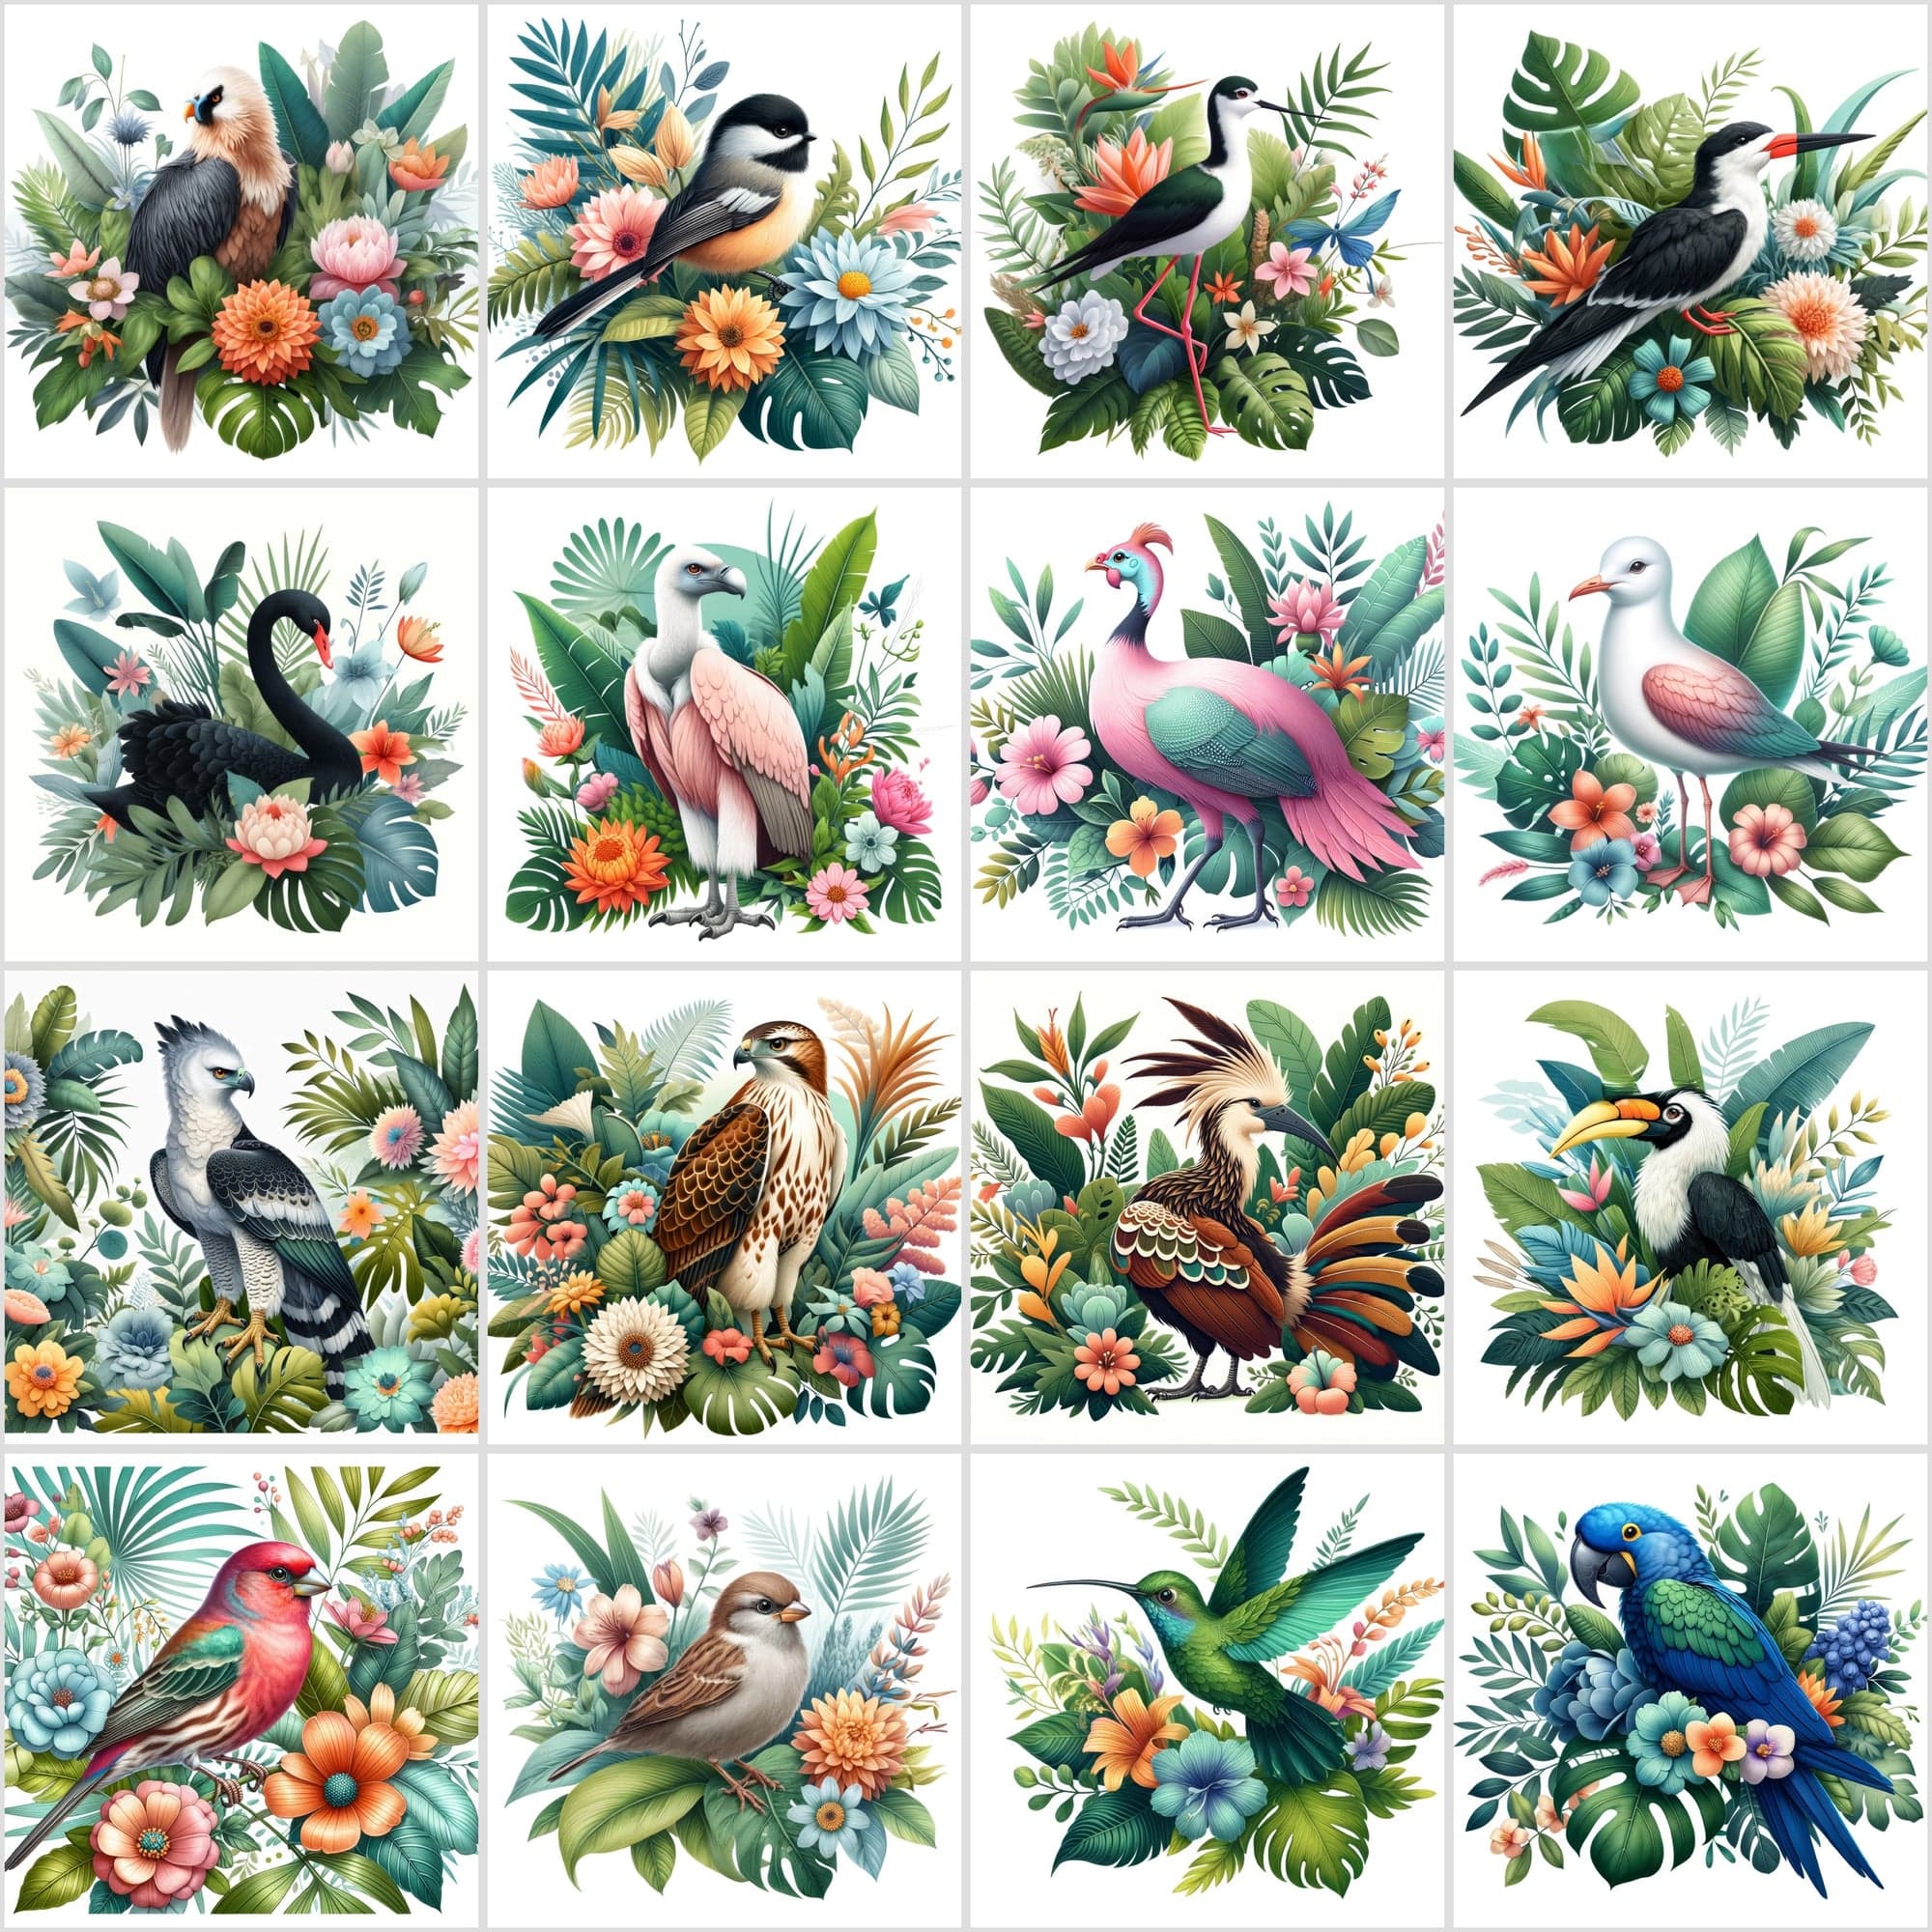 Whimsical Birds in Paradise: 130 Digital Illustrations of Tropical Elegance Digital Download Sumobundle